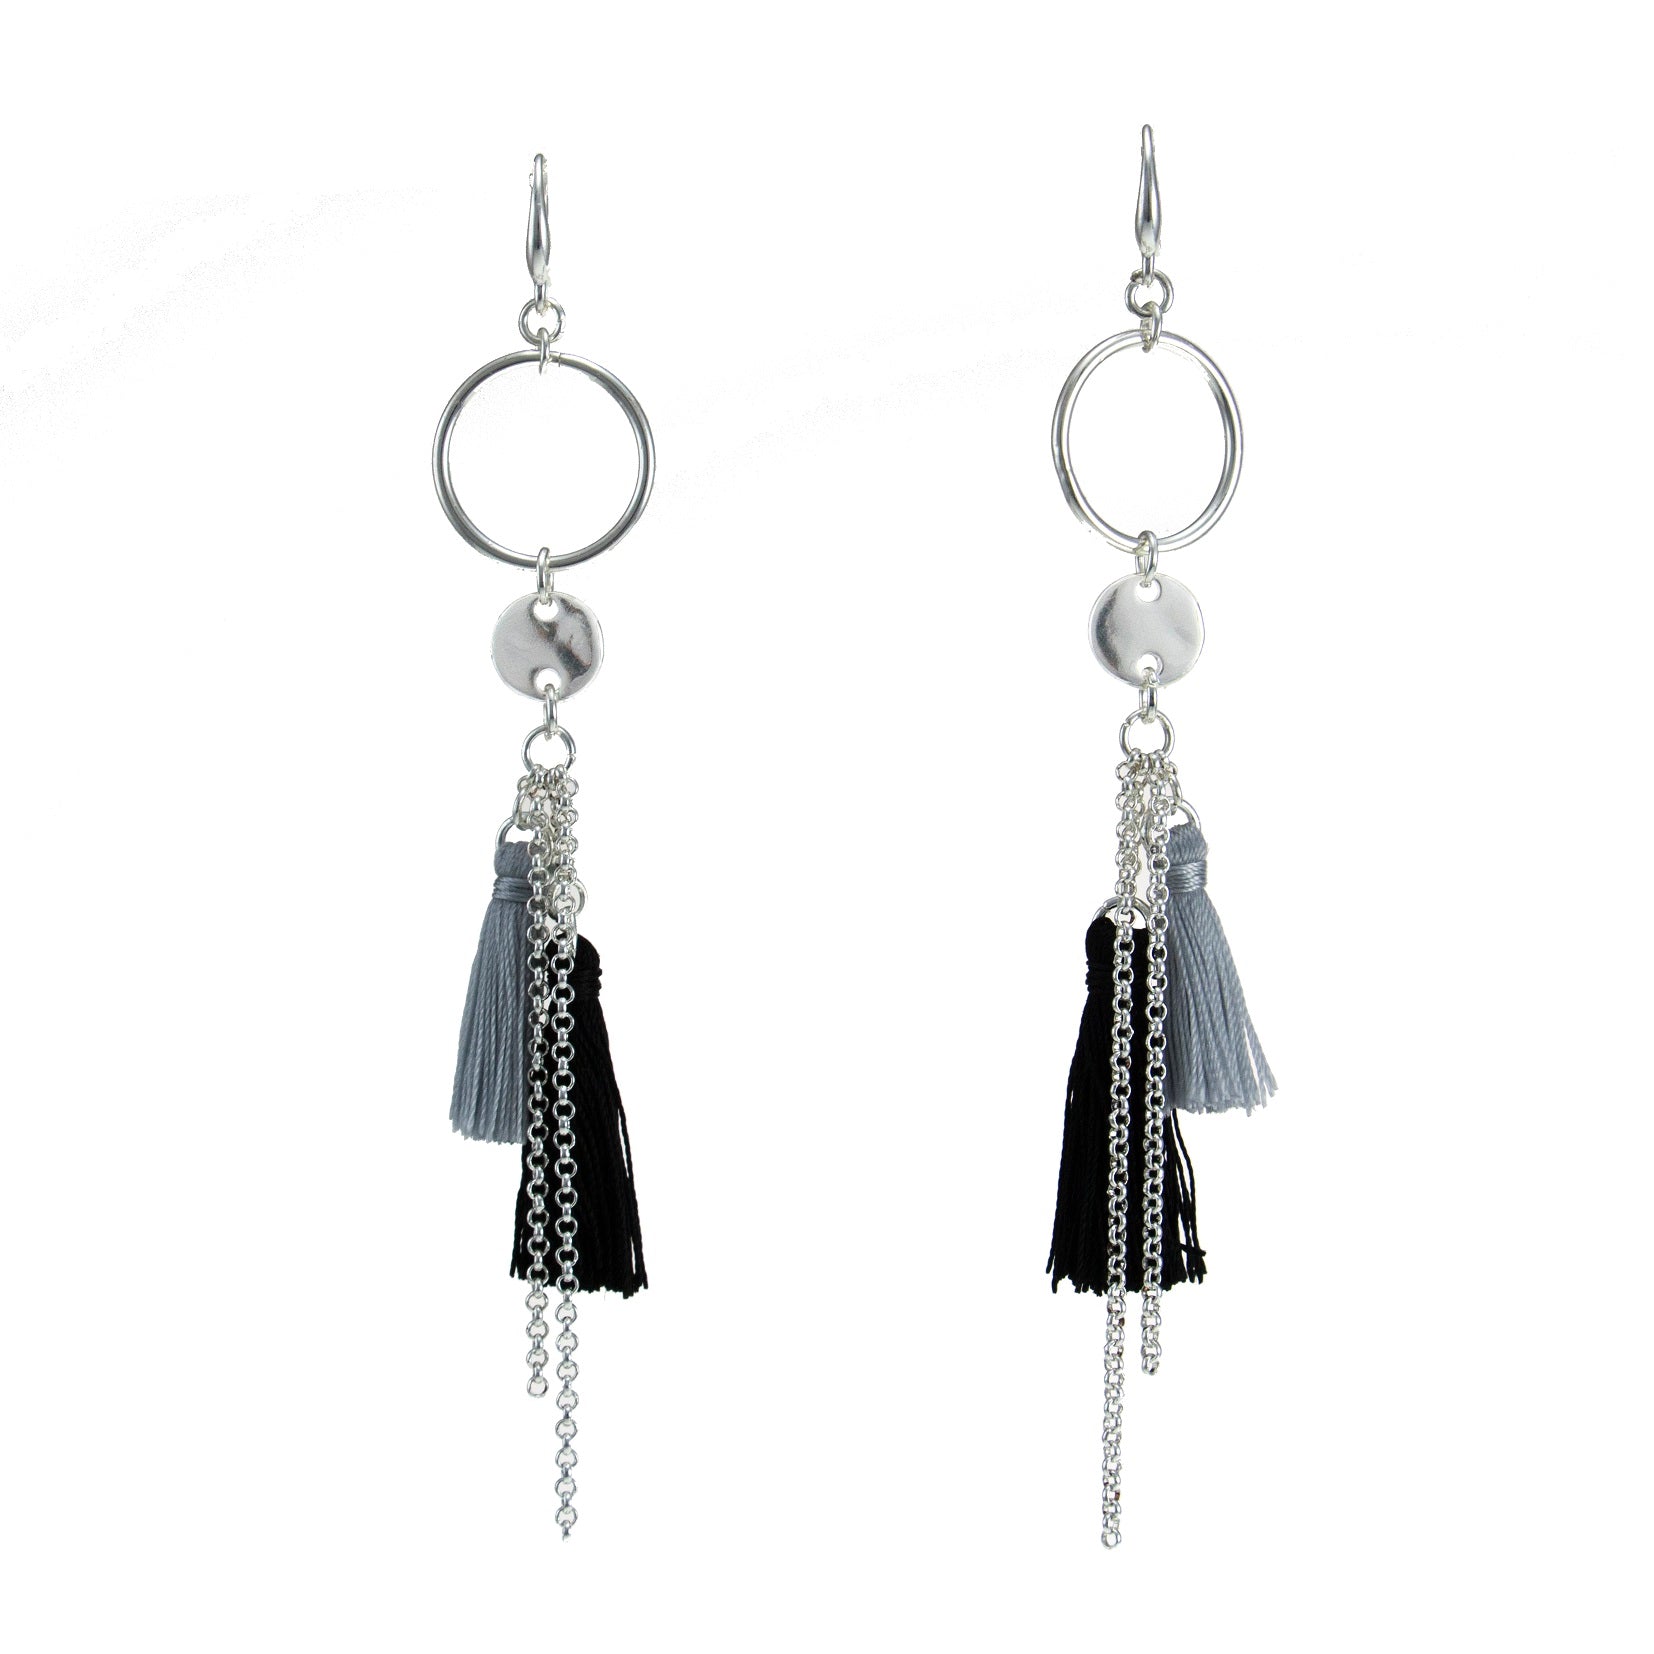 Merx fashion jewellery earring Shiny Silver Black large + Lt grey small tassel